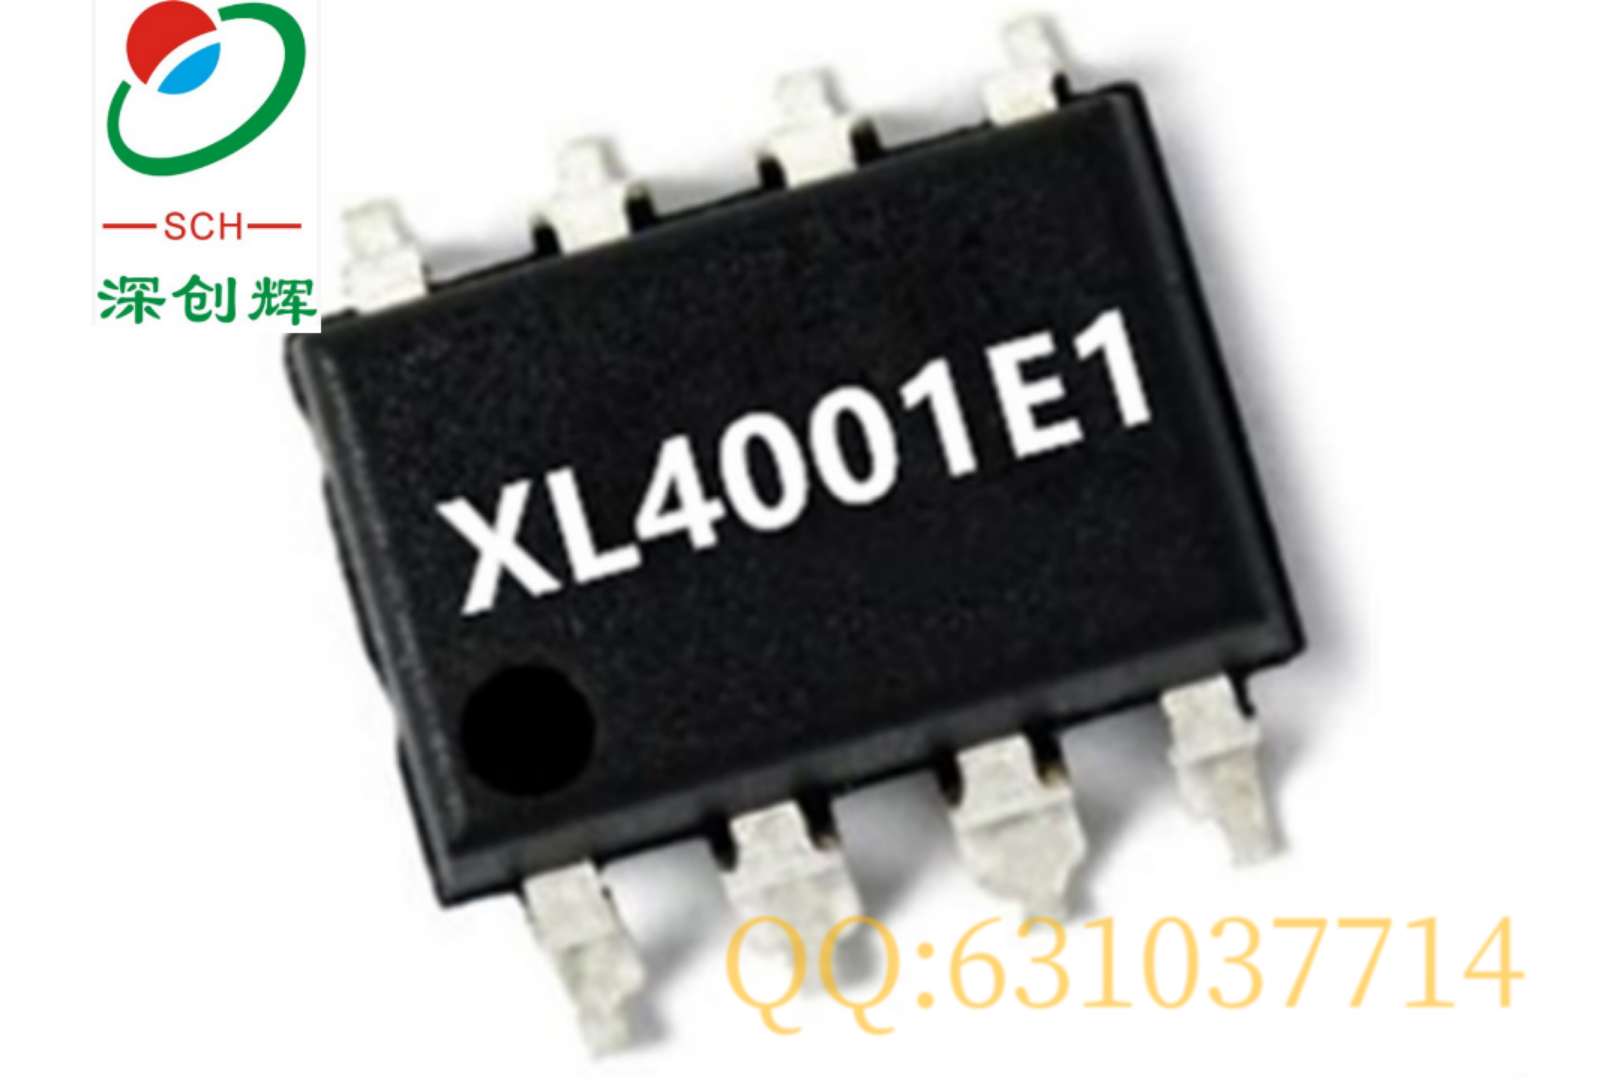 XL 4001自带恒压恒流环路的降压型直流电源变换器芯片  XL 4001直流电源变换器芯片